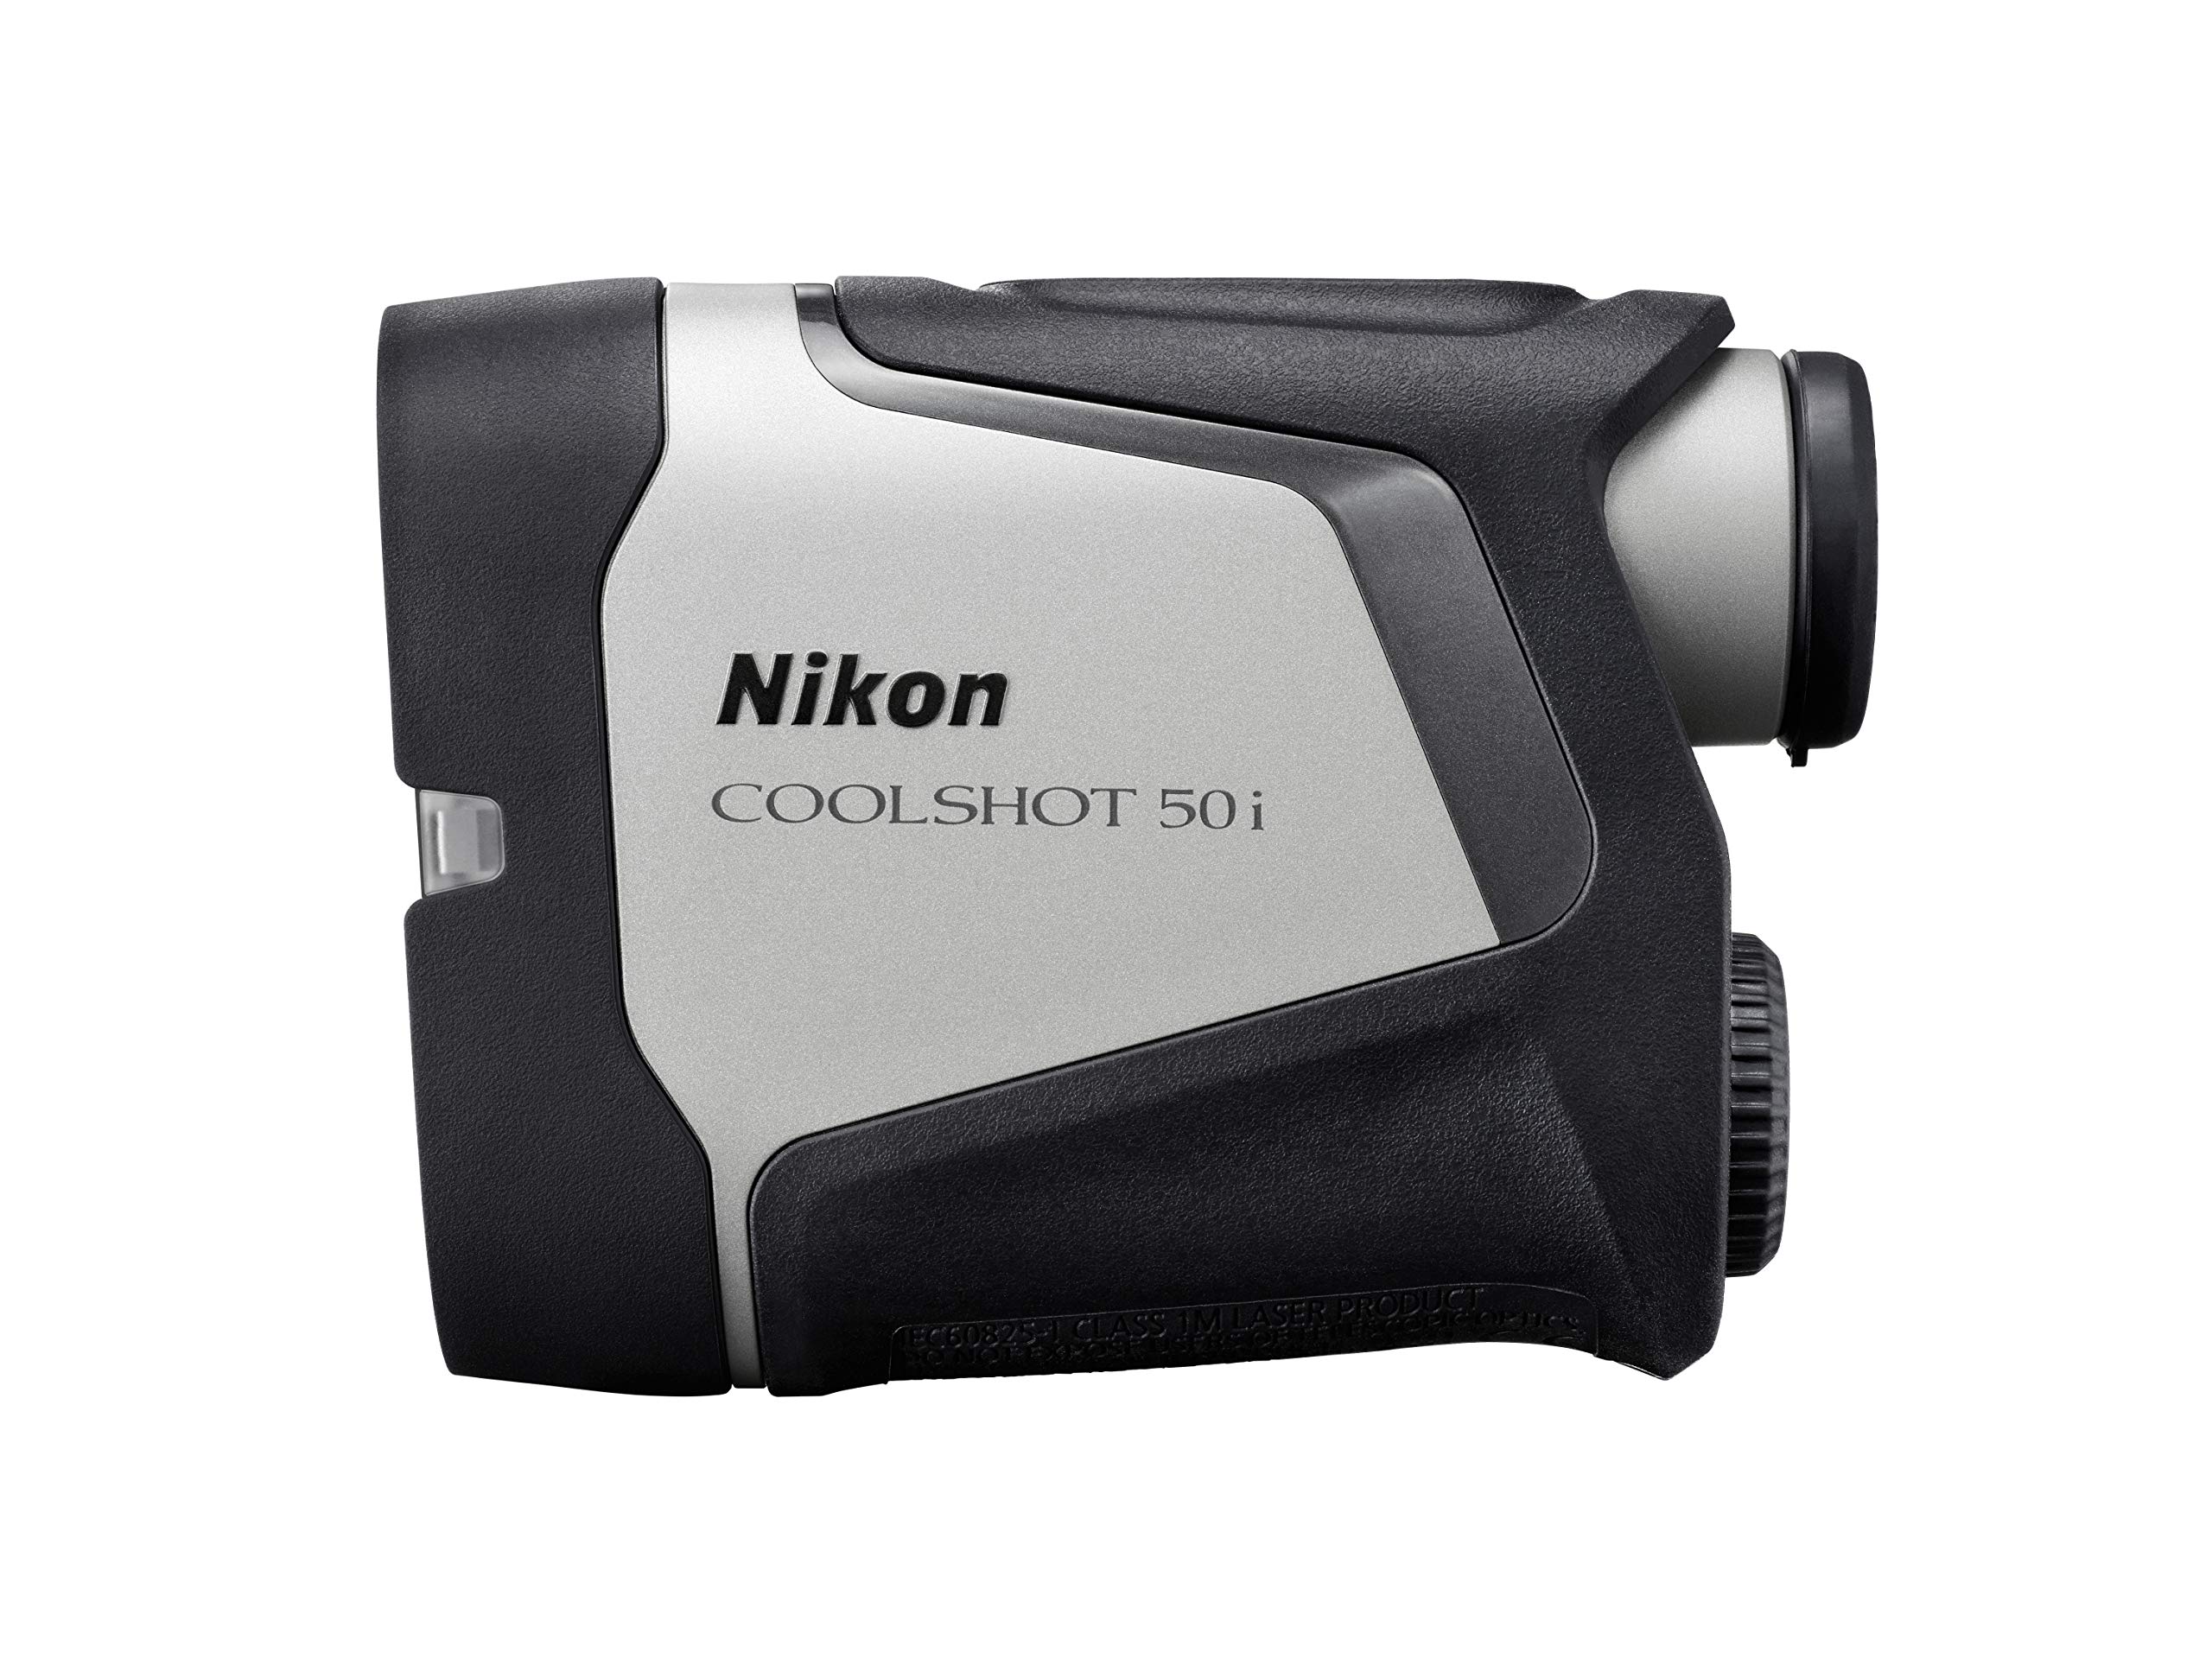 Nikon COOLSHOT 50i,Grey, Black